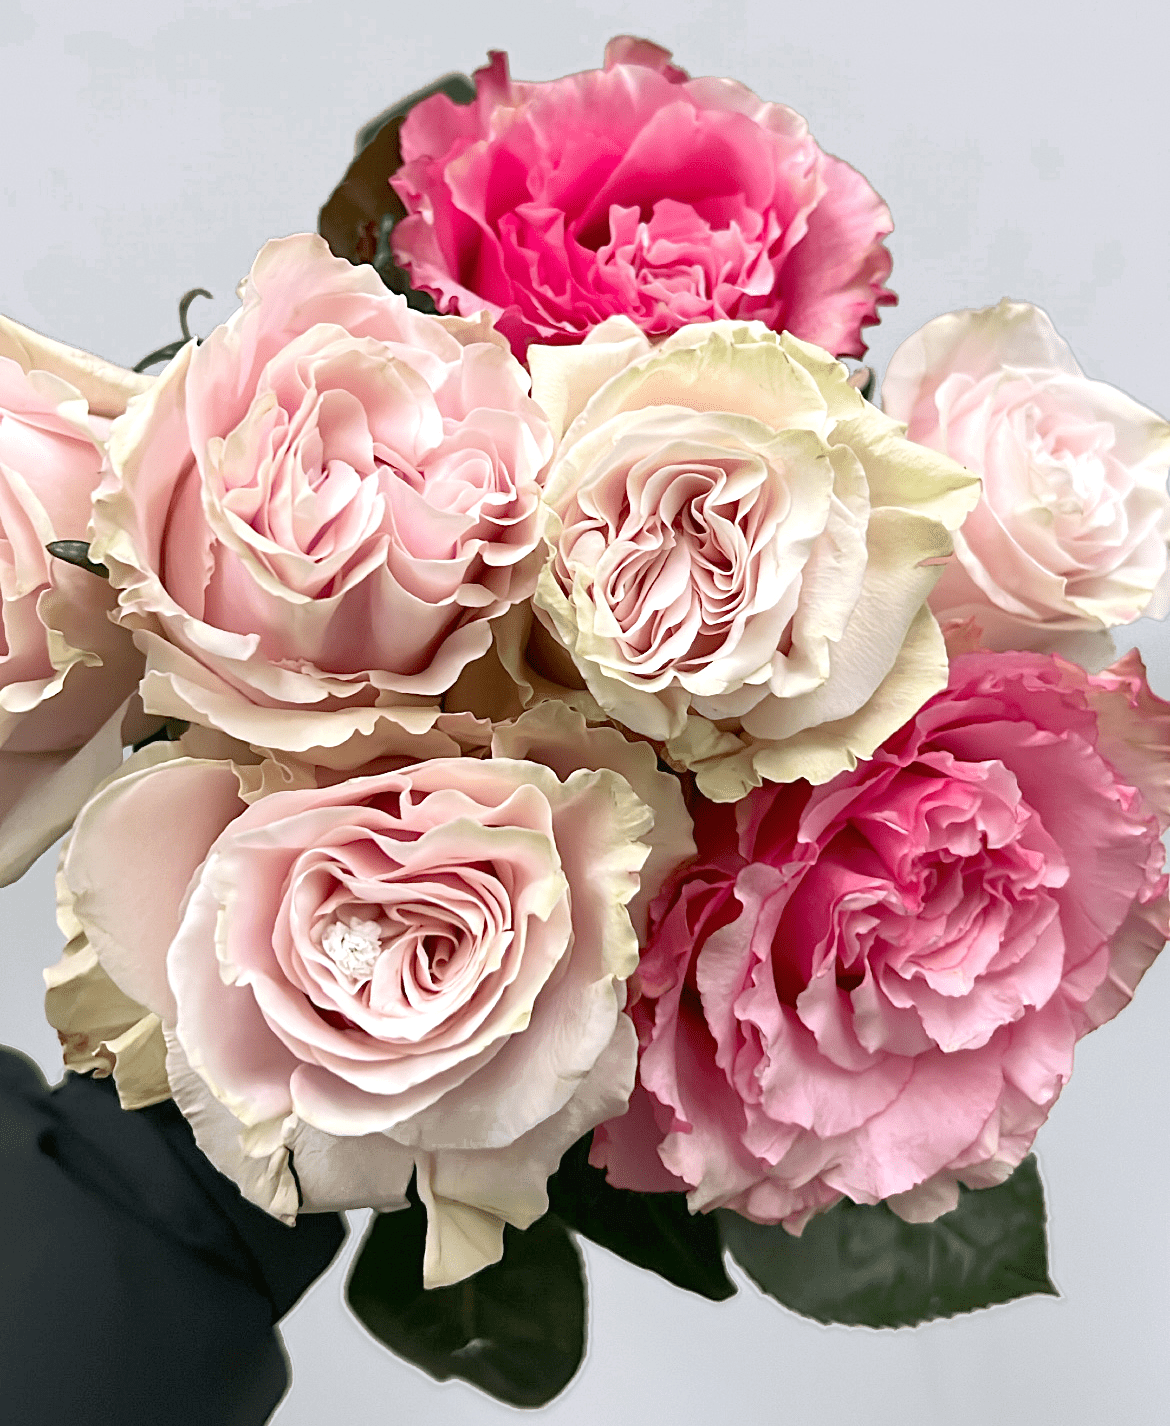 Delicious Roses - FLOWERFIX